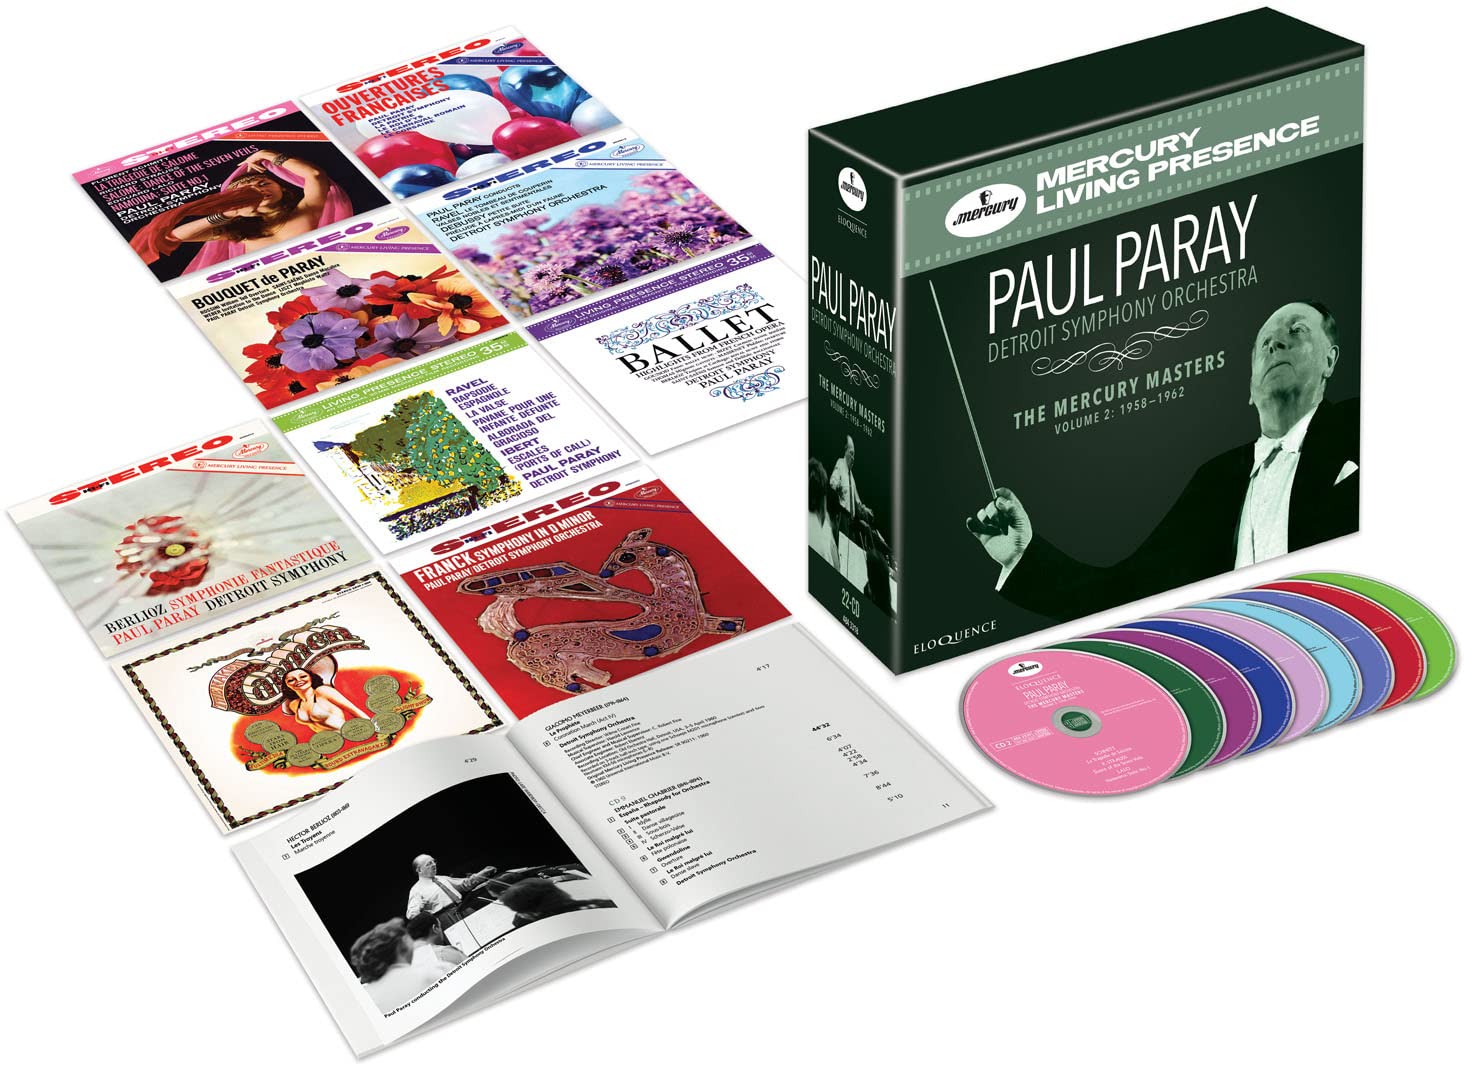 Paul Paray 폴 파레 머큐리 녹음 전집 2집: 1958-1962 (The Mercury Masters Volume 2: 1958-1962)